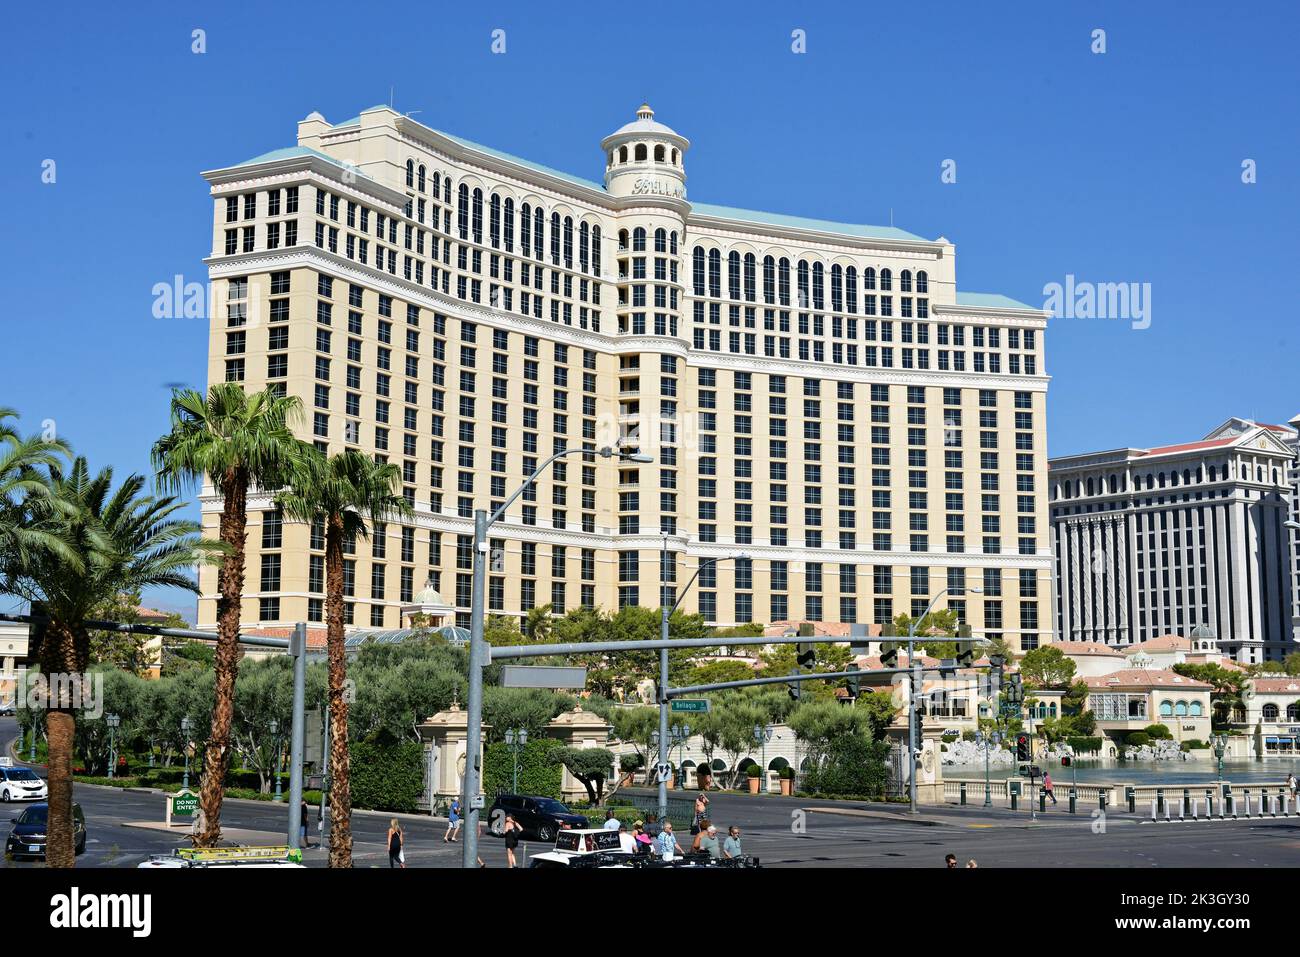 Bellagio Hotel located on the Las Vegas Strip,Nevada,USA Stock Photo